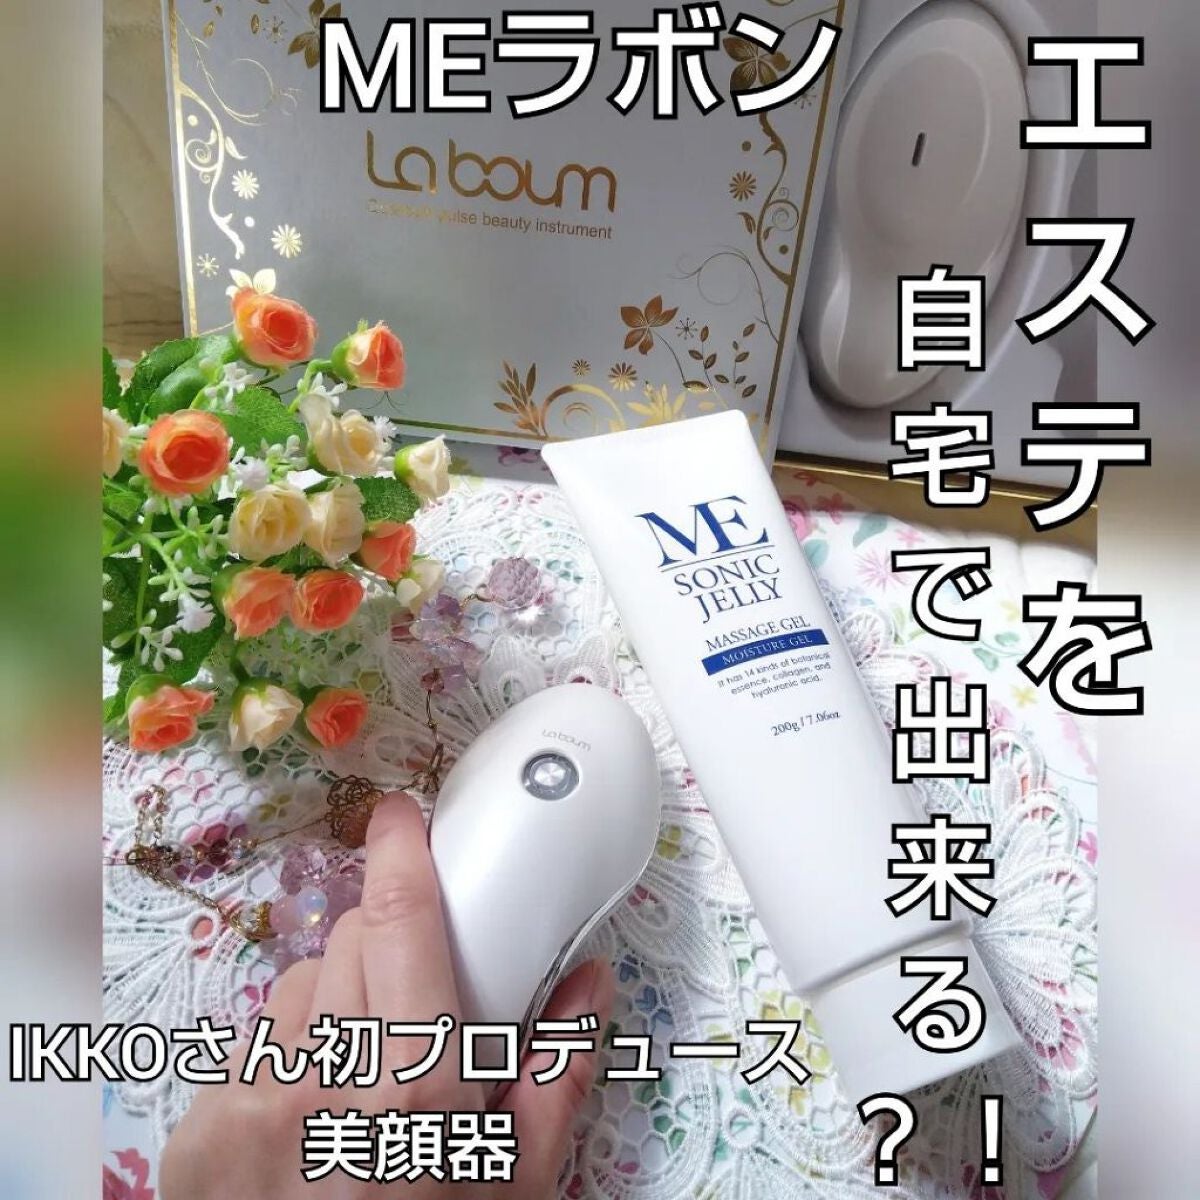 MEラボン IKKOさんプロデュース美顔器 - 美容機器